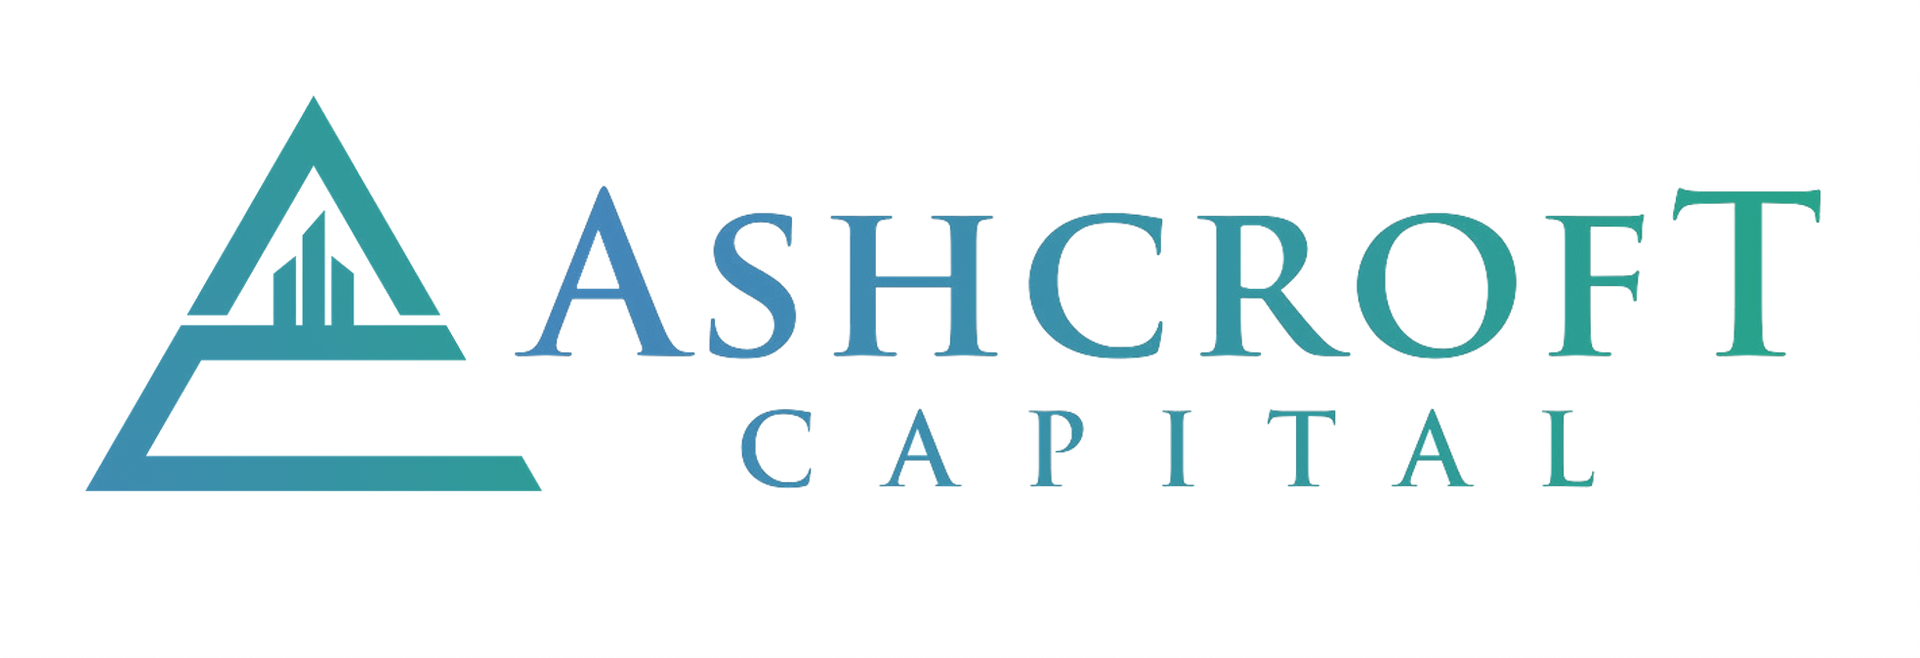 Ashcroft Capital Logo